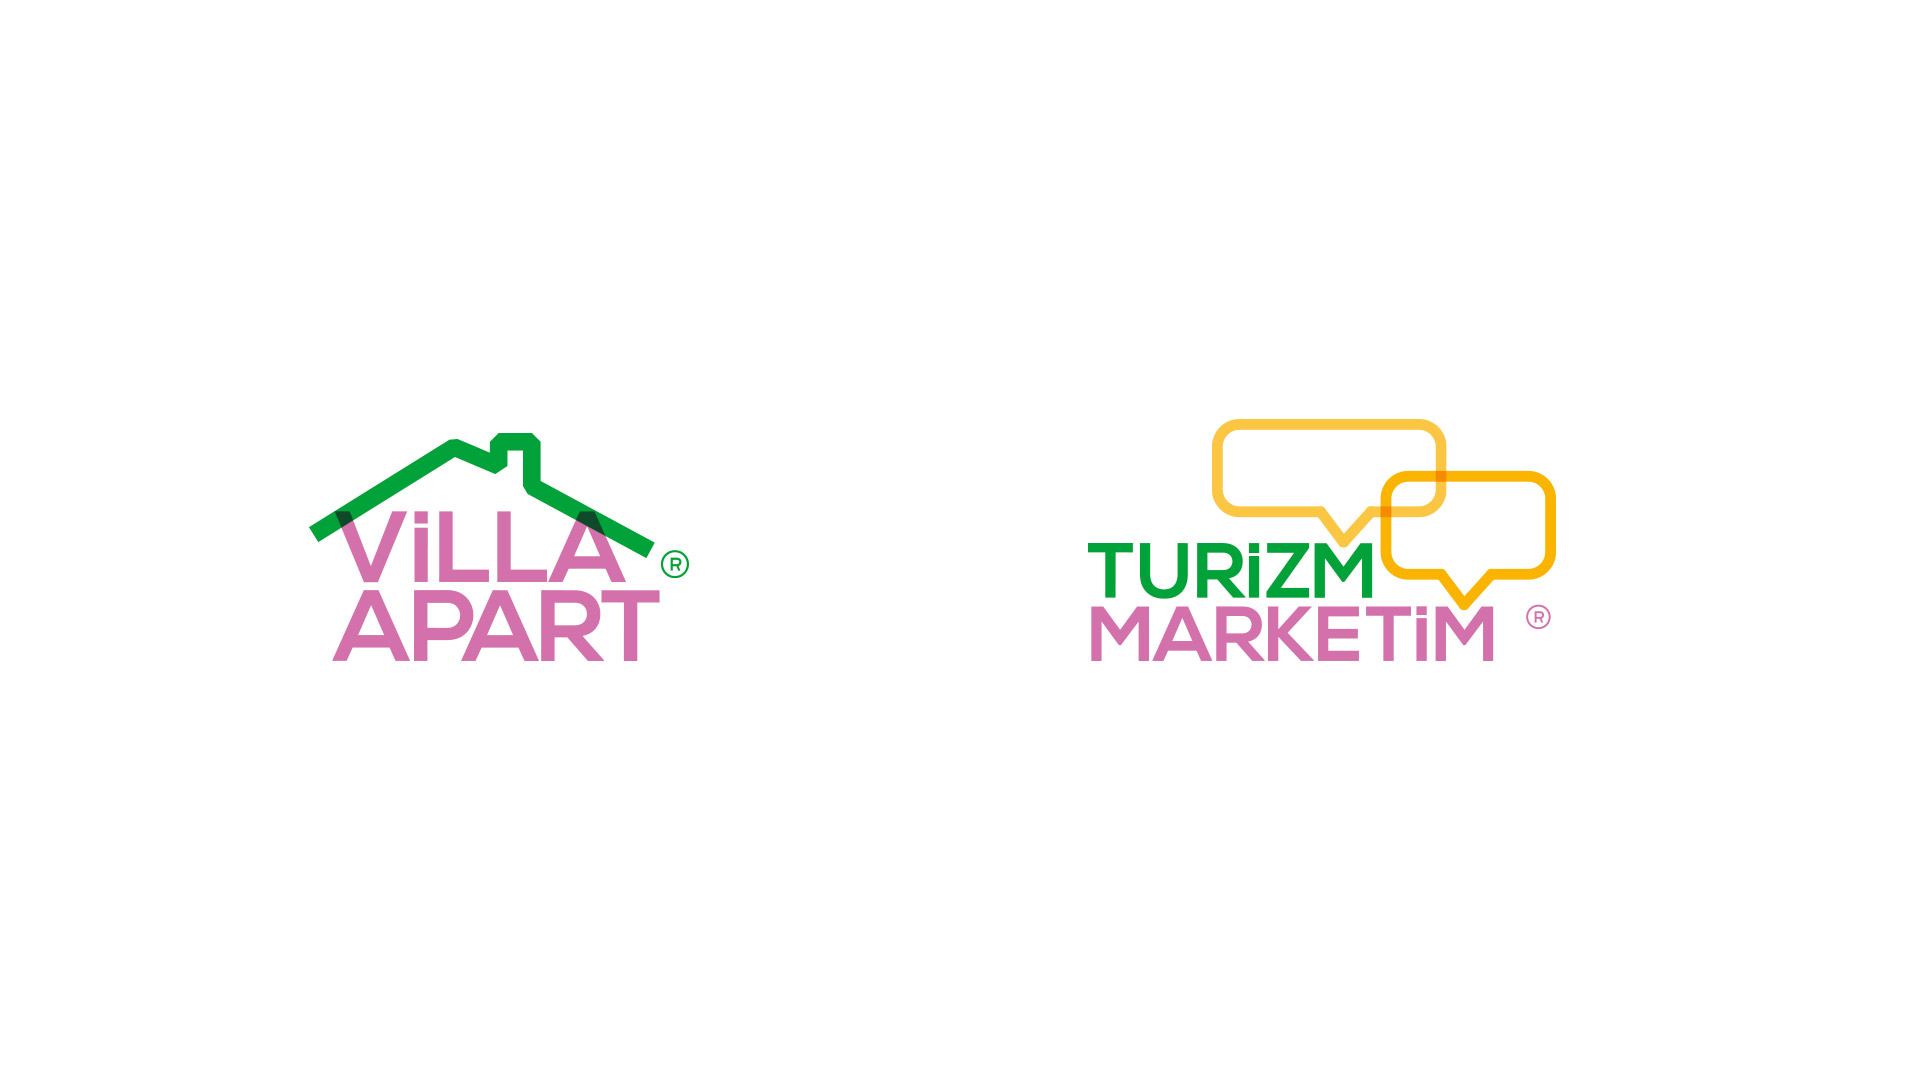 Ytm-Turizm-branding-sub-brands